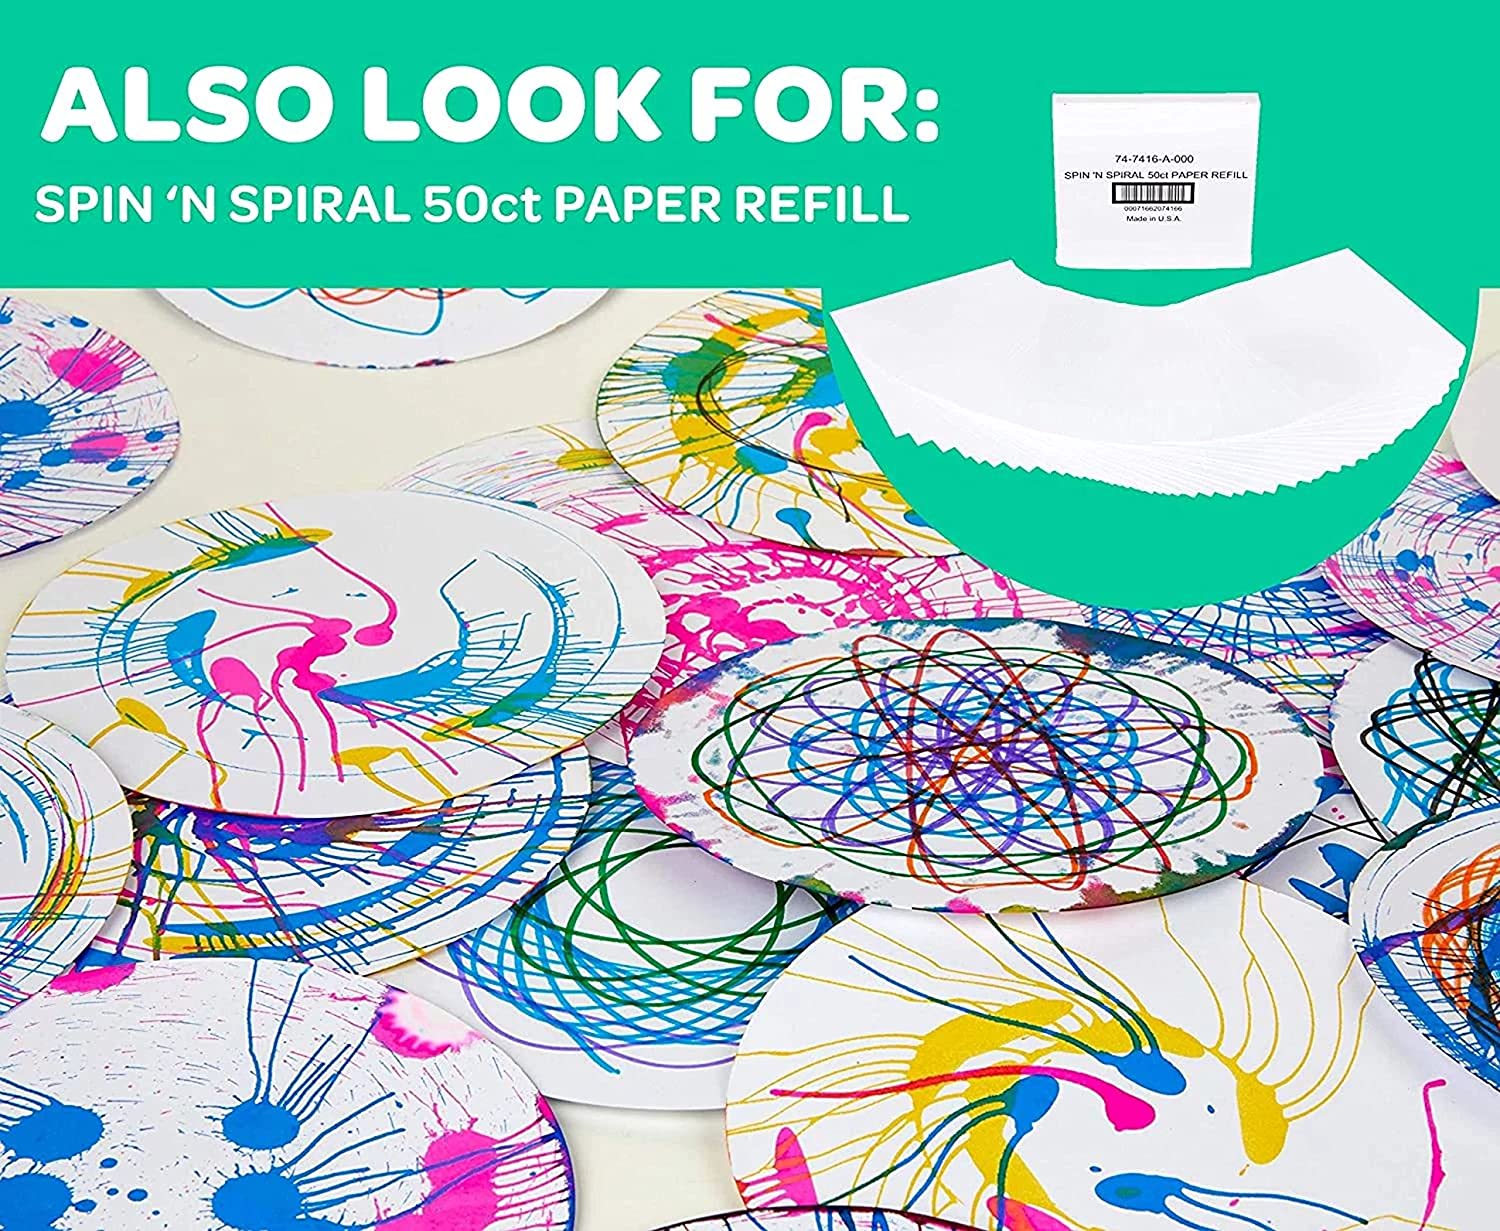 Crayola Spin & Spiral Art Station Activity Kit